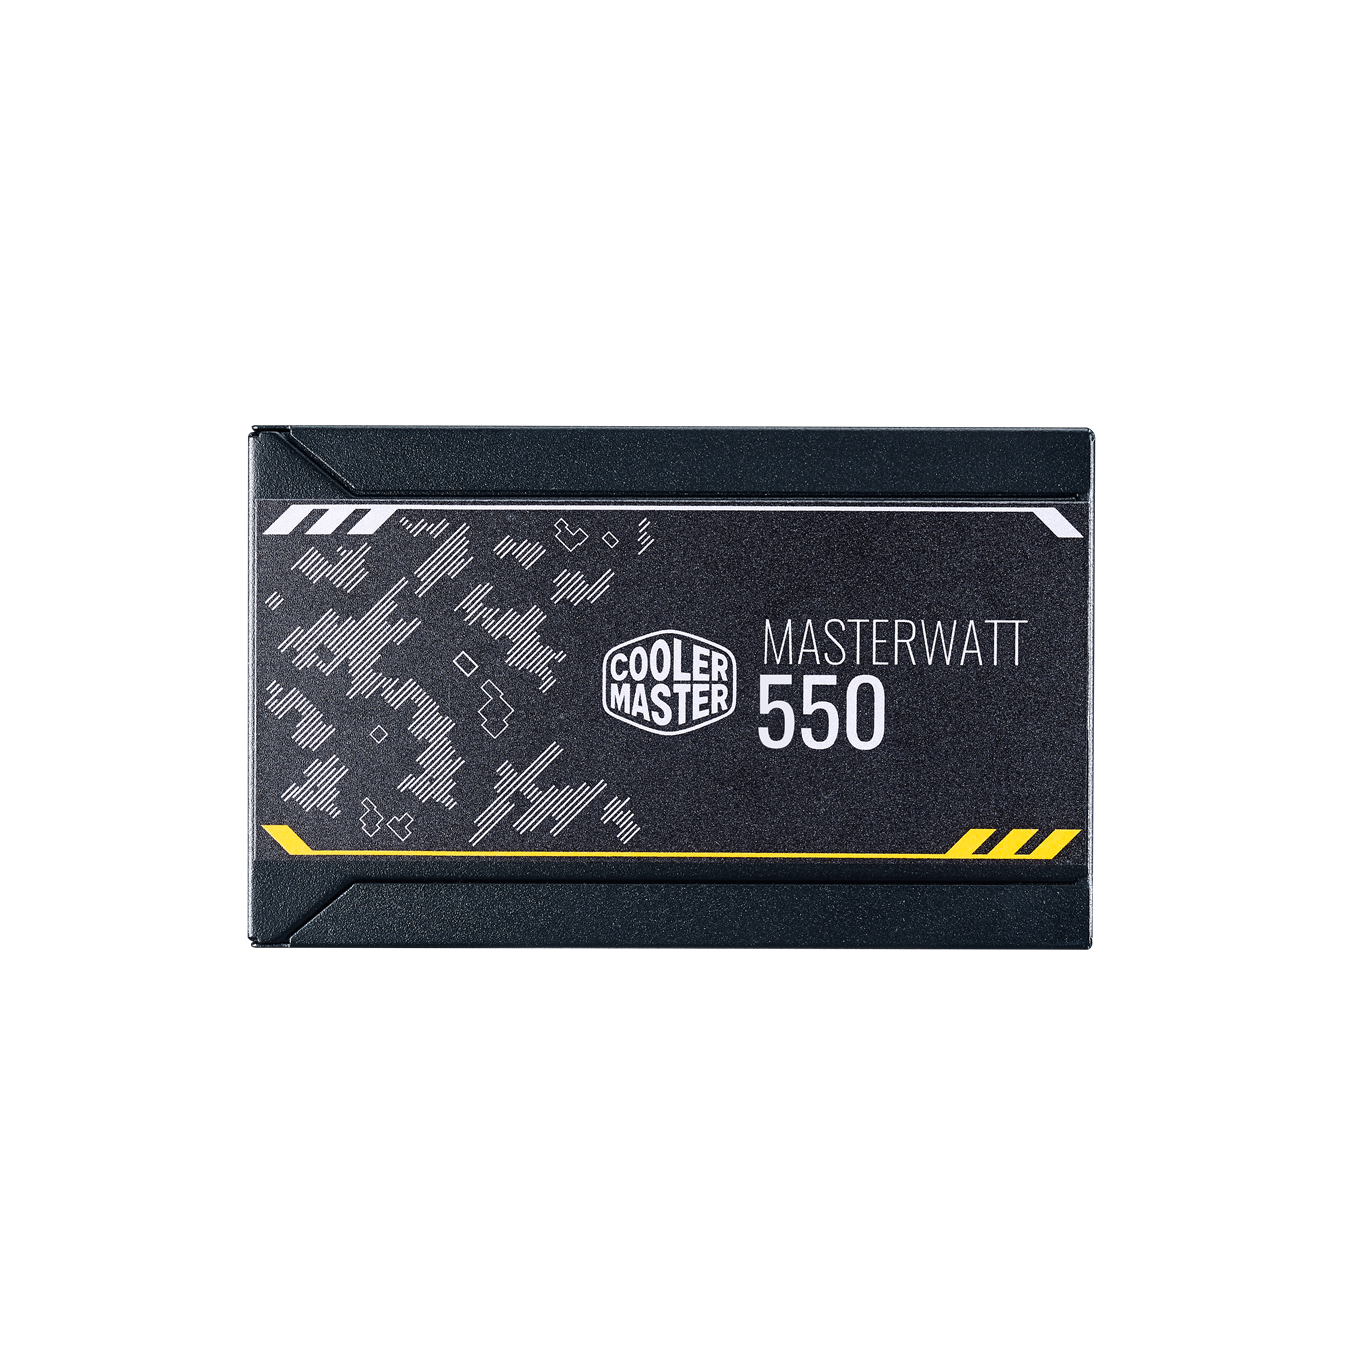 MasterWatt 550 TUF Gaming Edition - power label